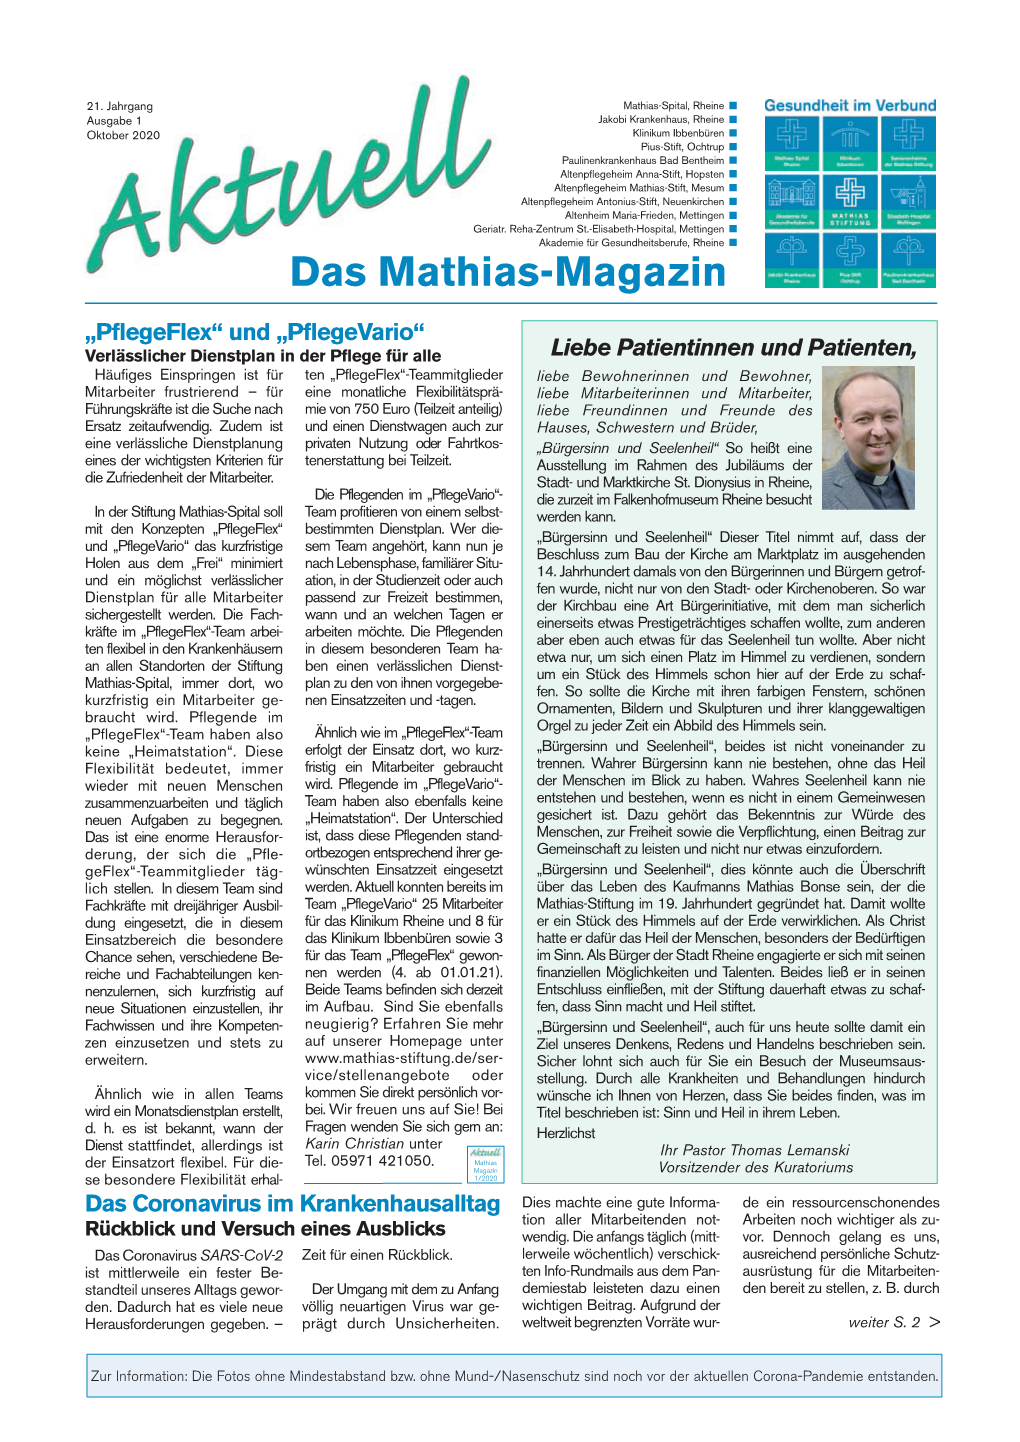 Das Mathias-Magazin Gazin